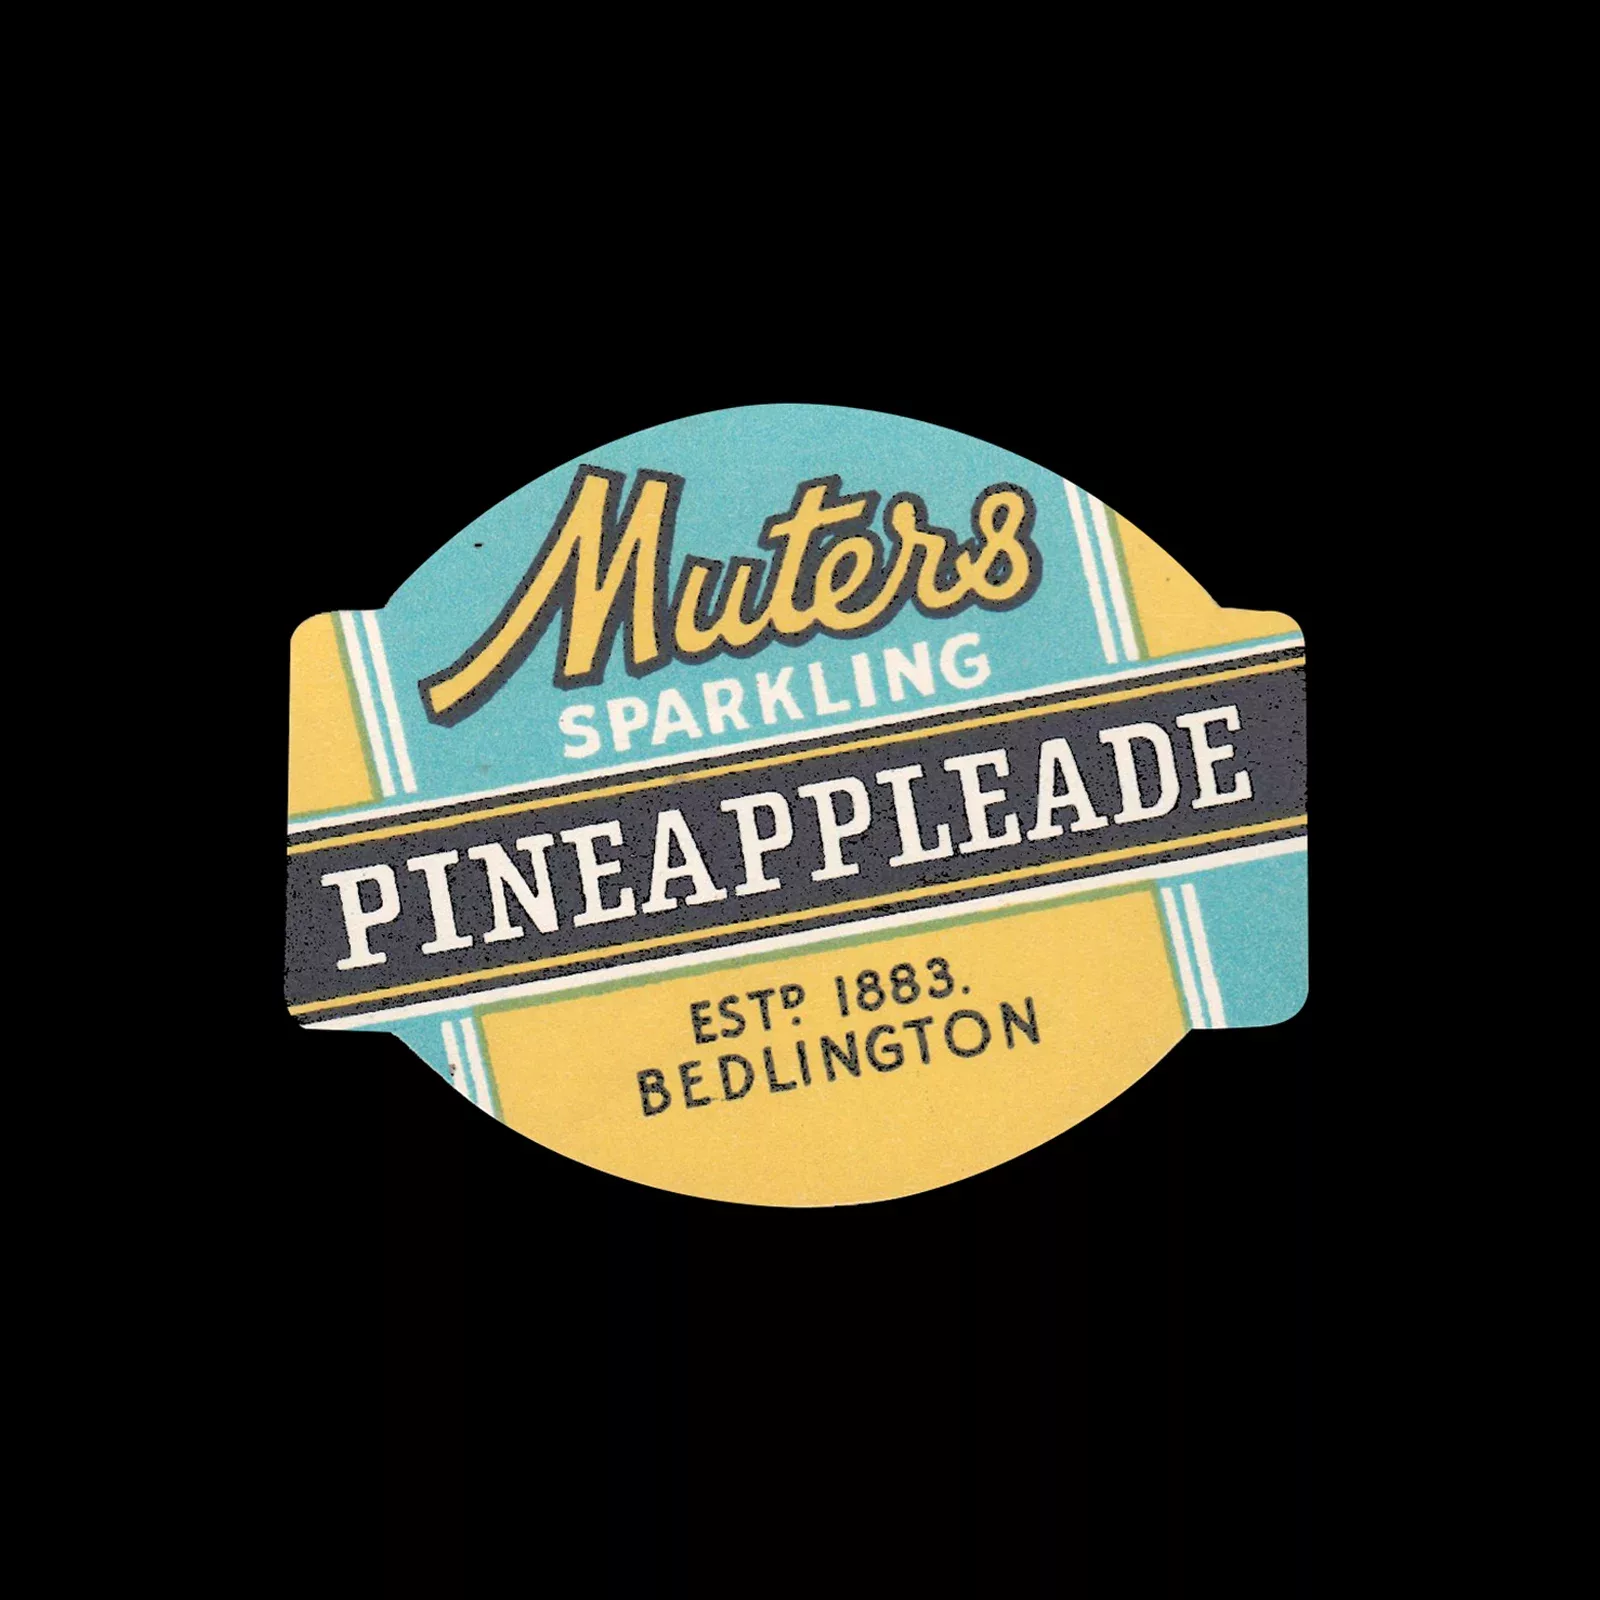 Muter's Spakling Pineappleade, Fruit Drink Label